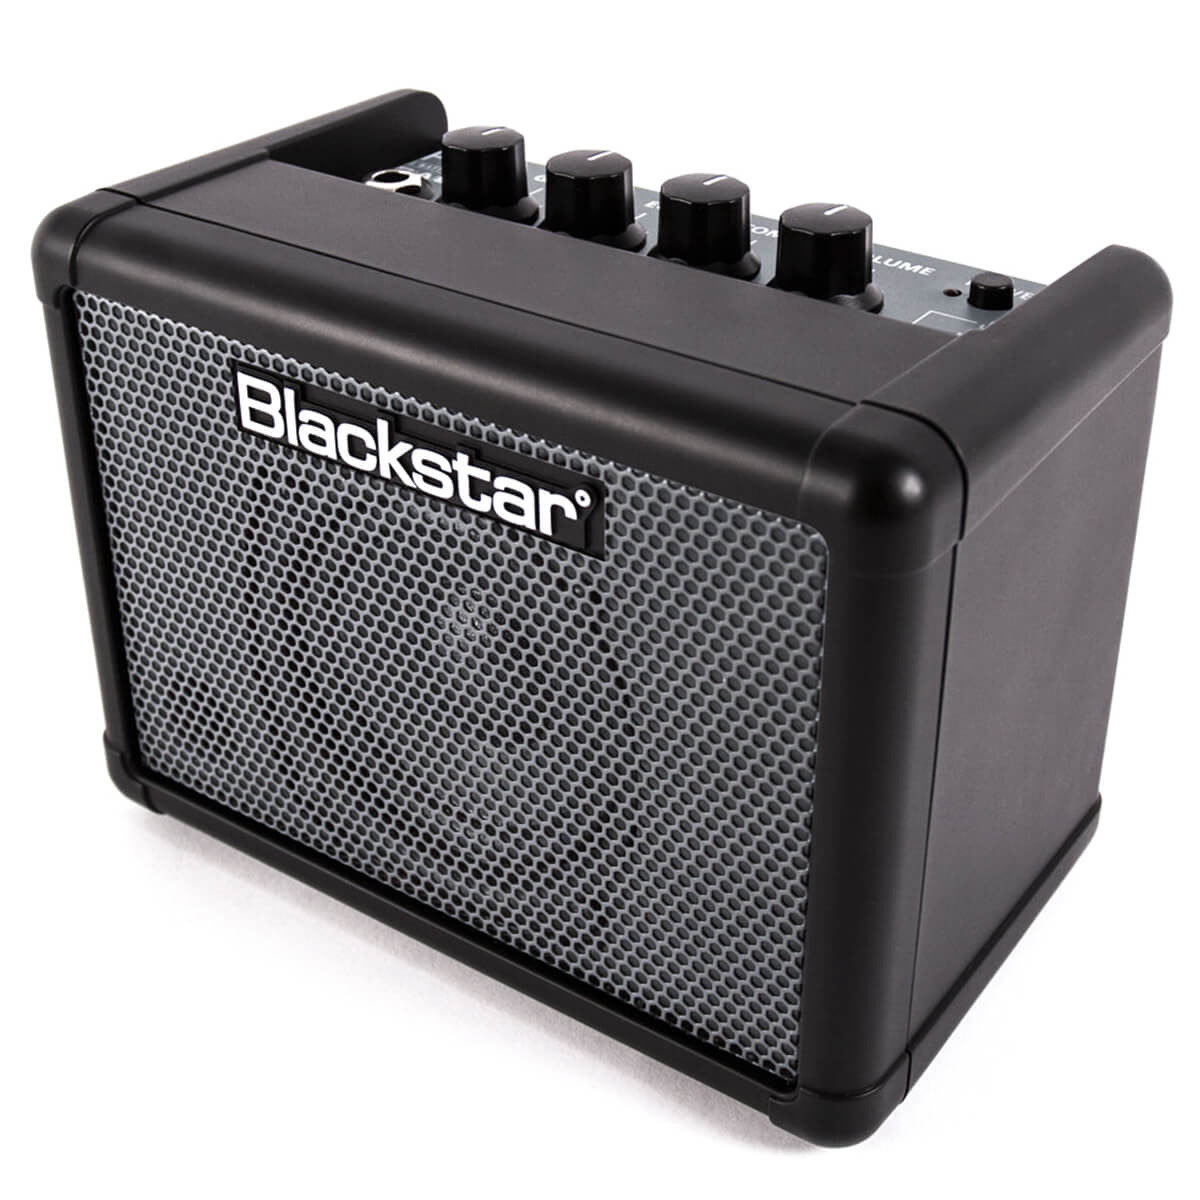 Blackstar Amps FLY 3 bass mini amplifier left